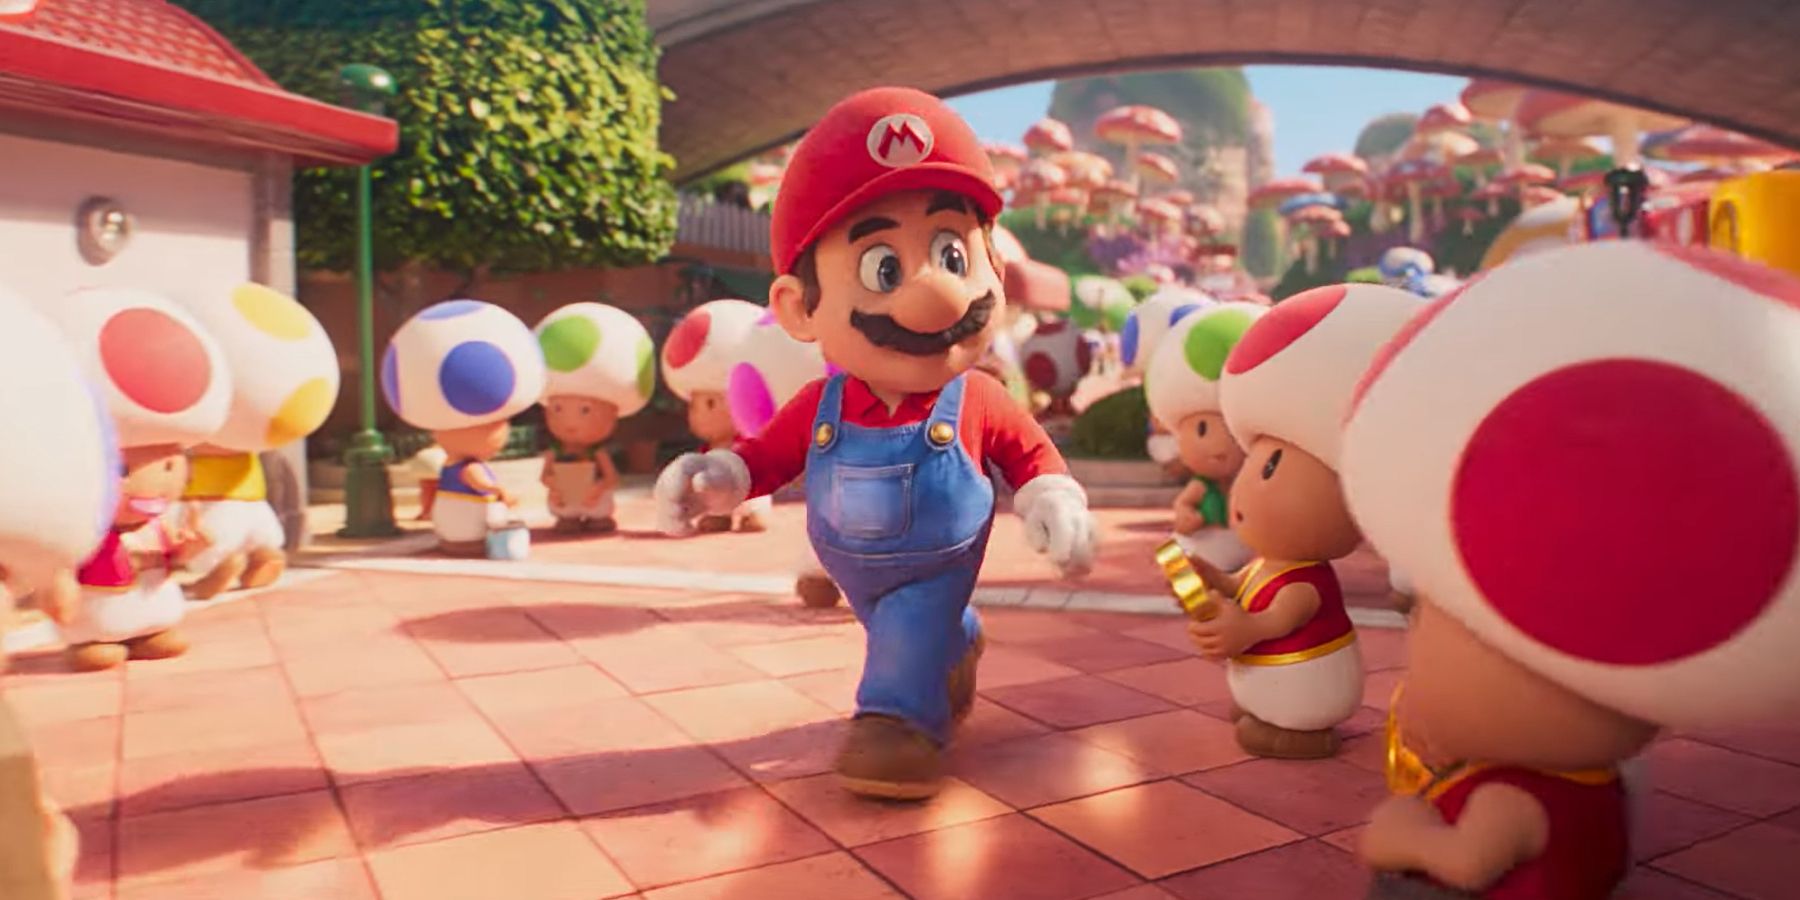 Mario walking through the Mushroom Kingdom in the Super Mario Bros. movie